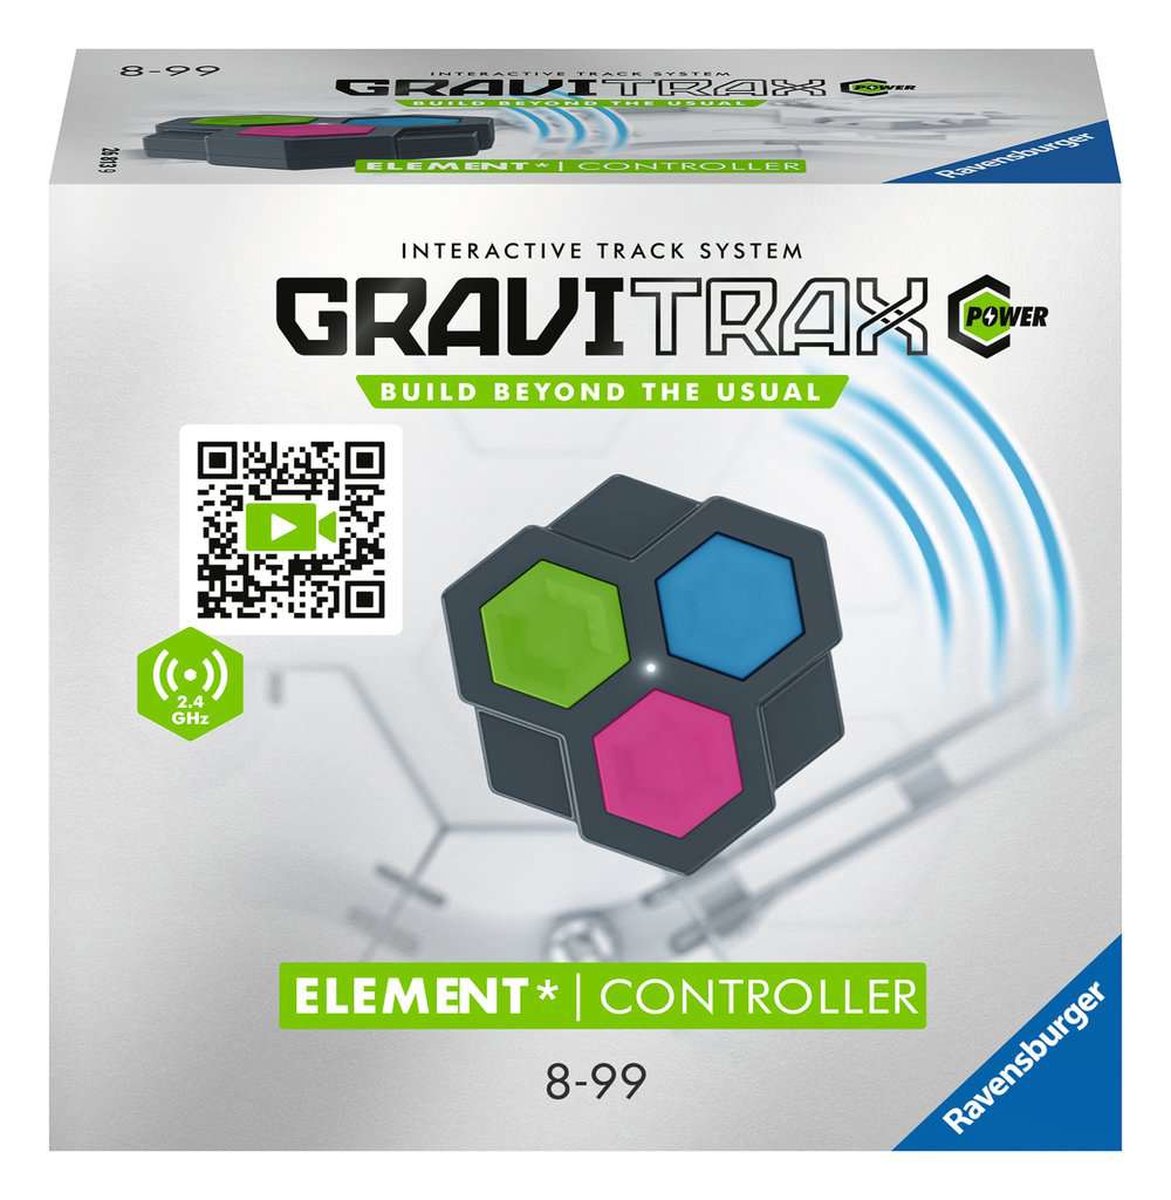   GraviTrax Power Element Remote